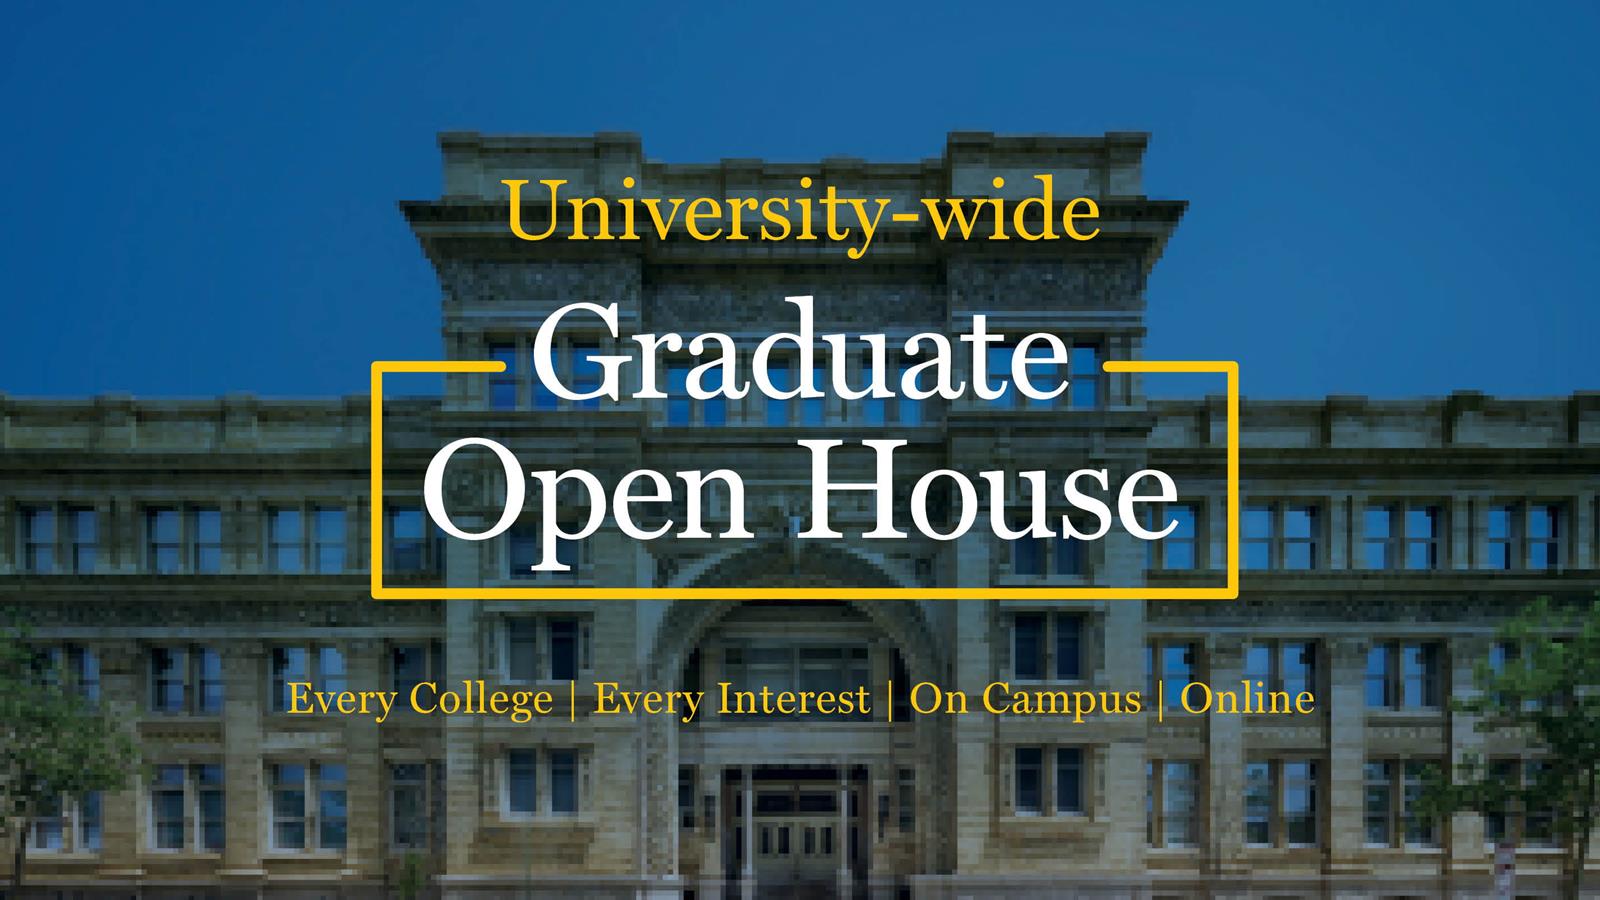 University-wide Graduate Open House